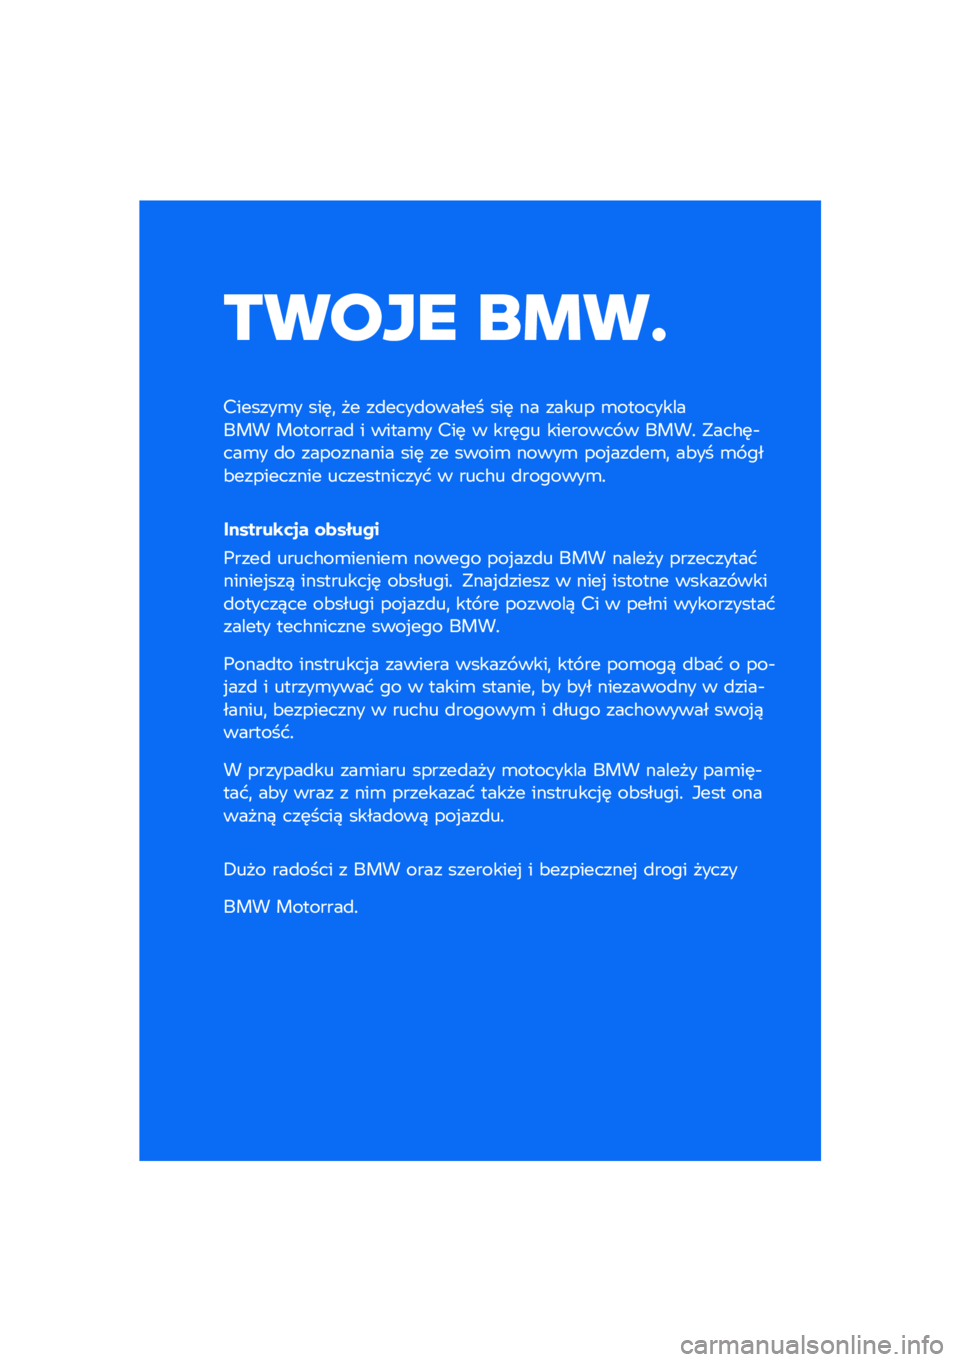 BMW MOTORRAD R 1250 RS 2020  Instrukcja obsługi (in Polish) ����� ��\b��	
�������\b� ���	�
 �� ��
����
������ ���	 �� ����� �\b����������� ��������
 � �����\b� ���	 � ���	�� �������� �